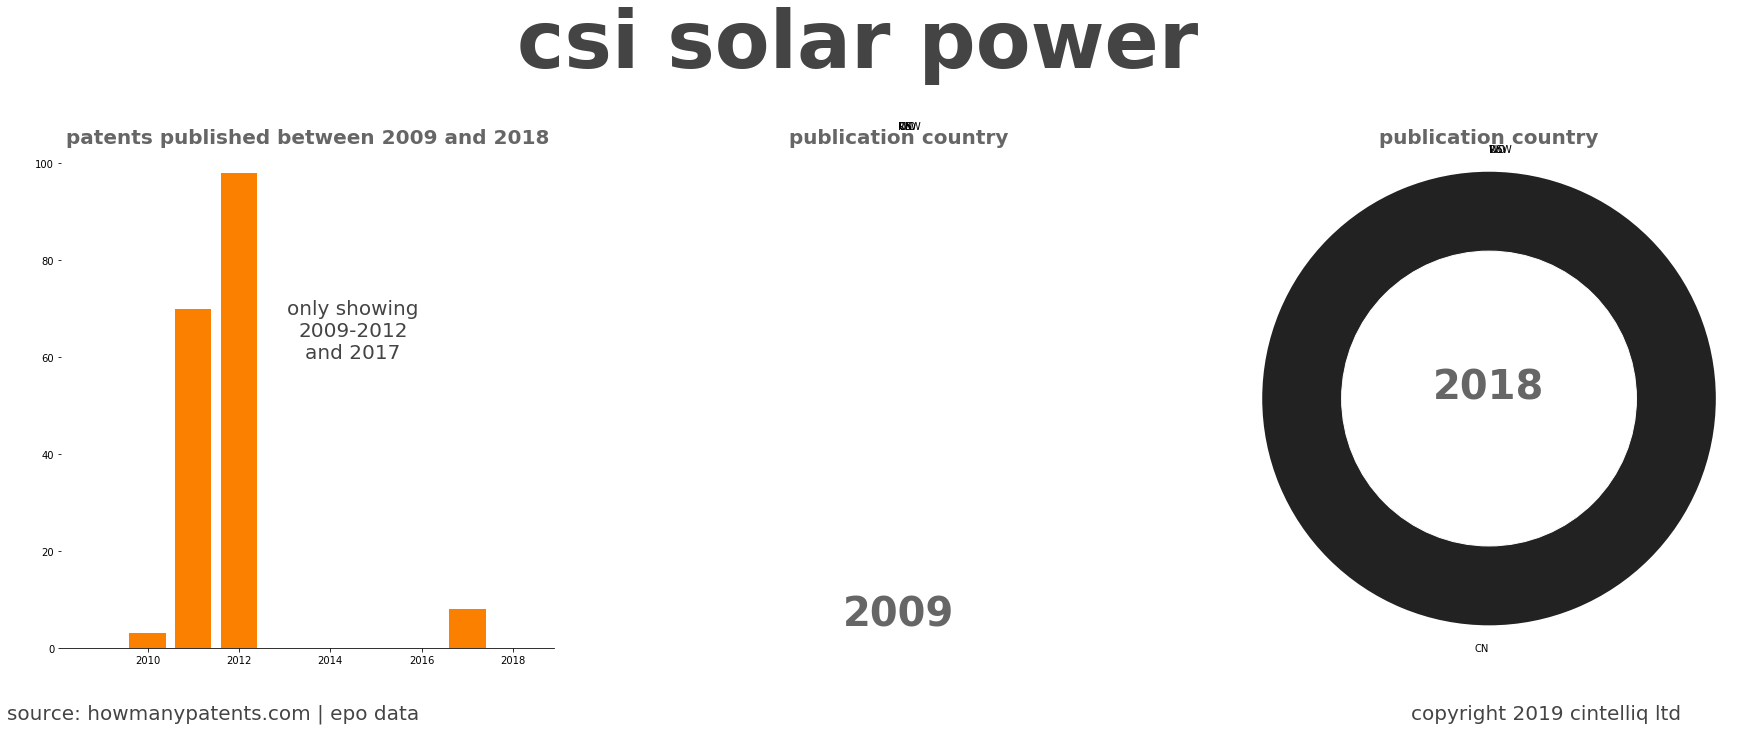 summary of patents for Csi Solar Power 